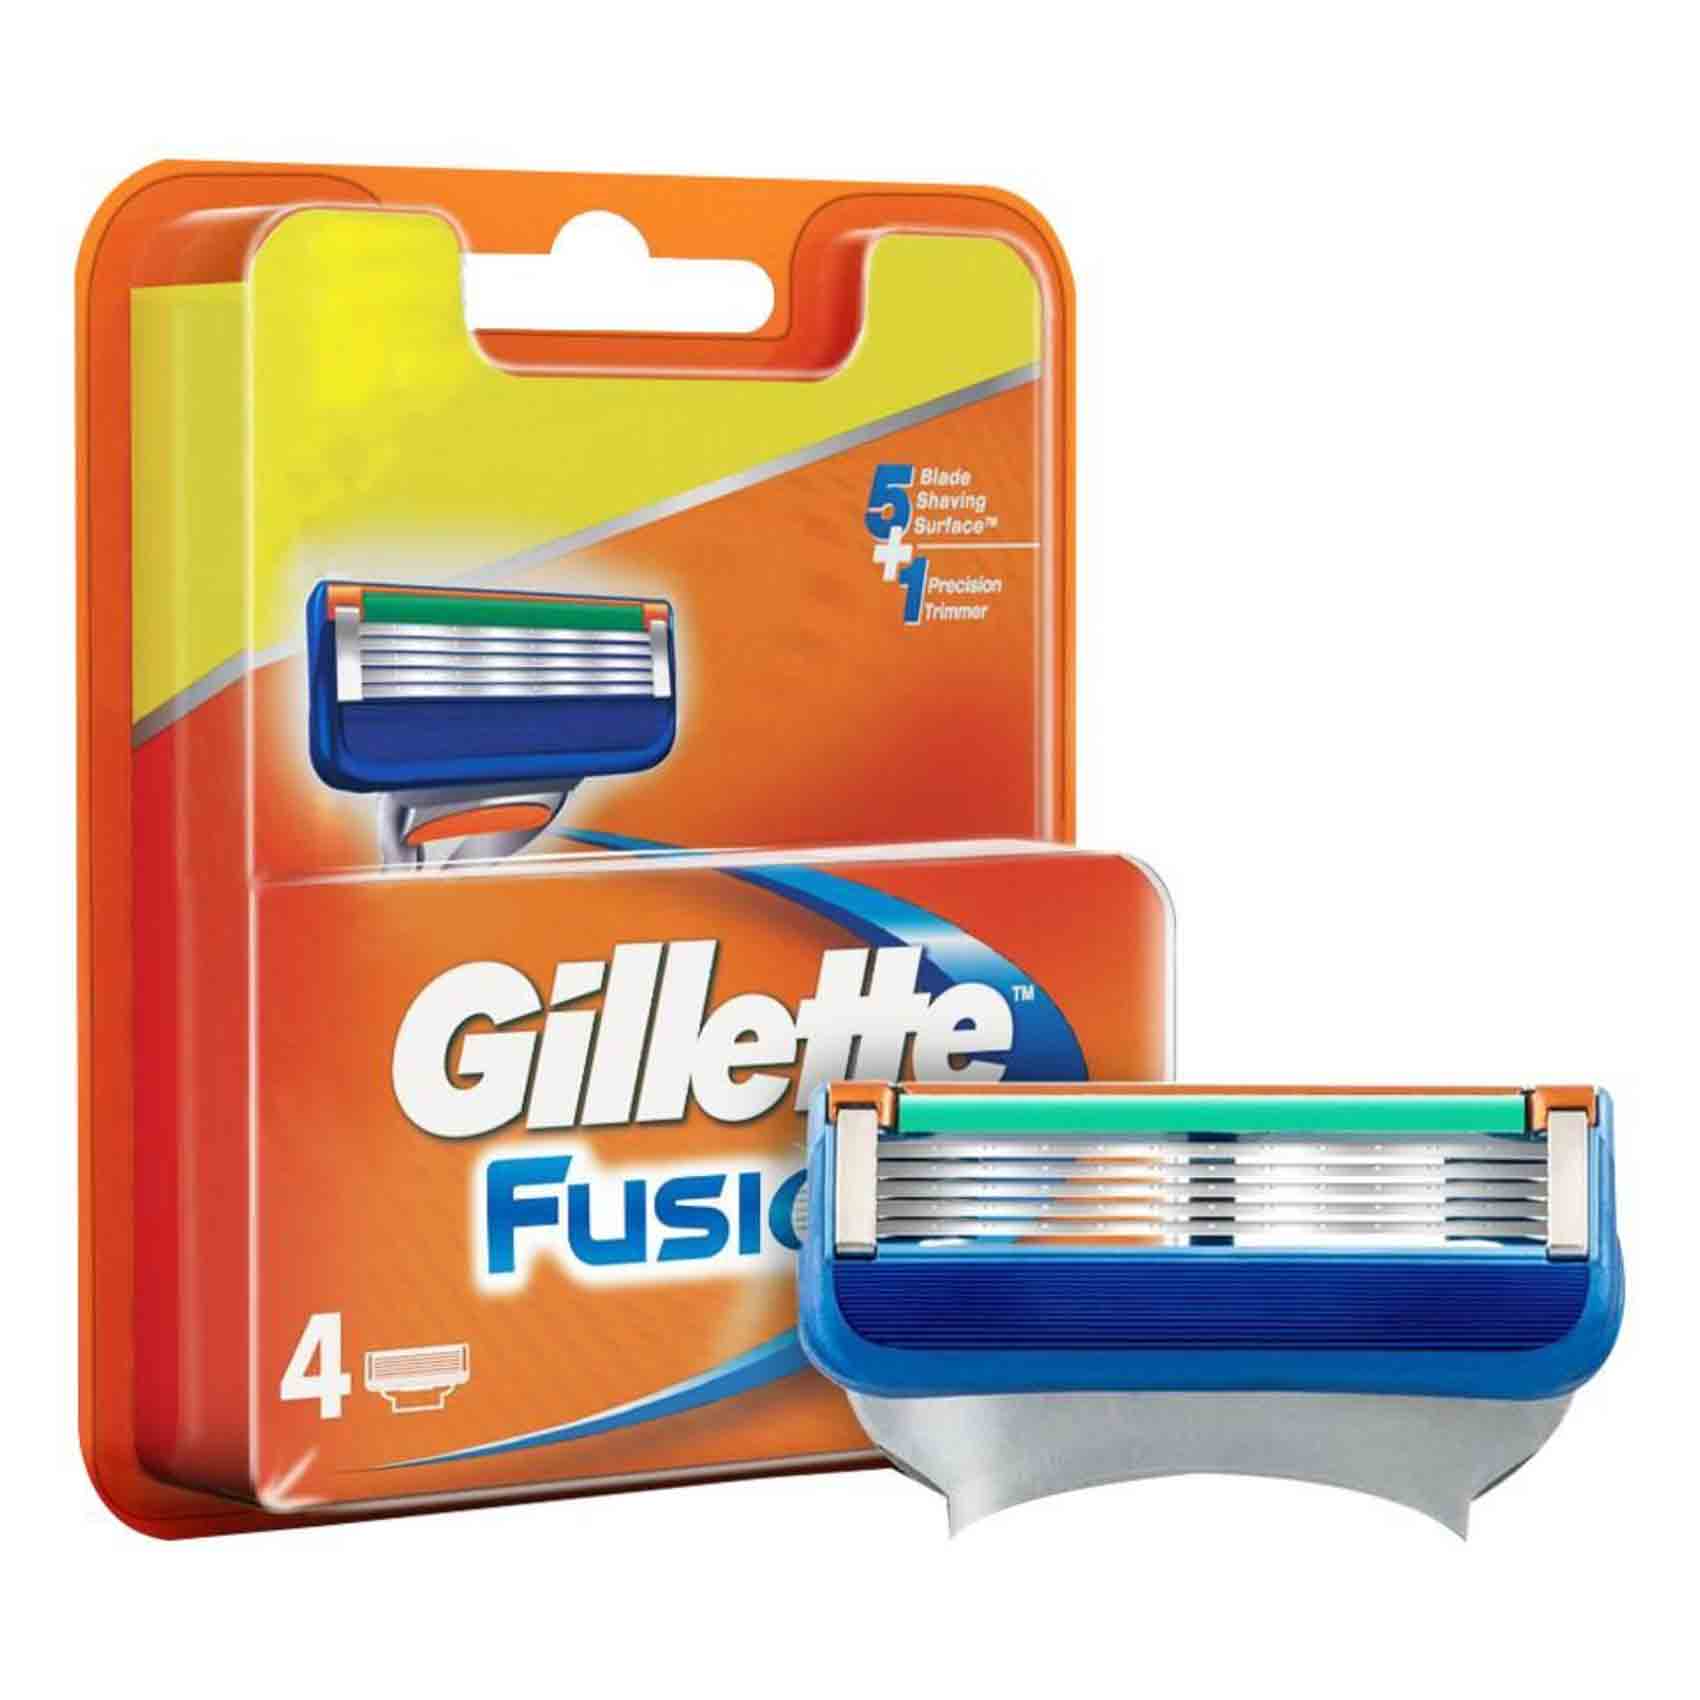 Gillette Fusion Power Shaving Razor Cartridge 4 Piece